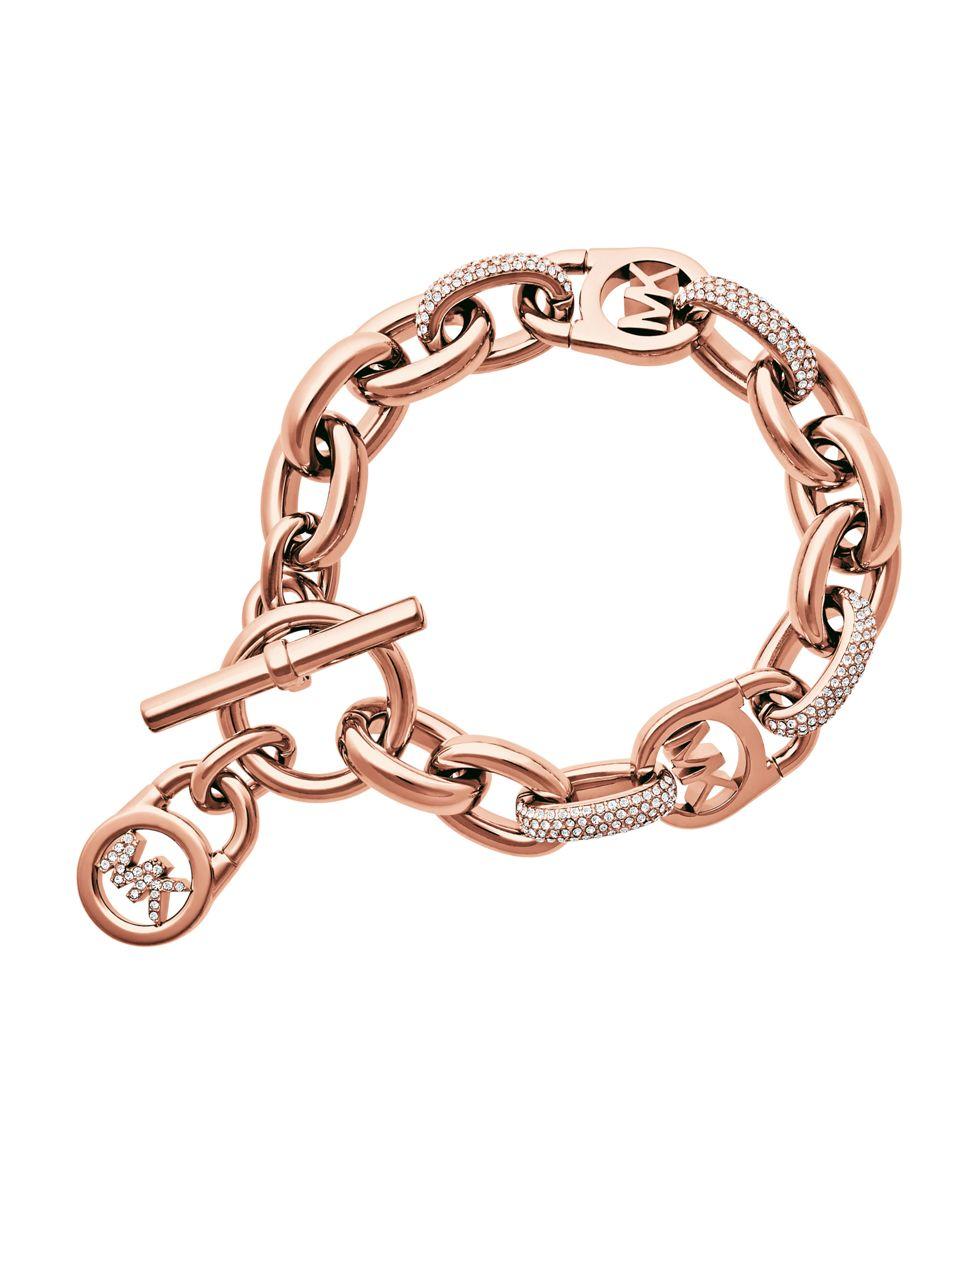 Lyst - Michael Kors Rose Goldtone Oversized Chain Link Bracelet in Metallic